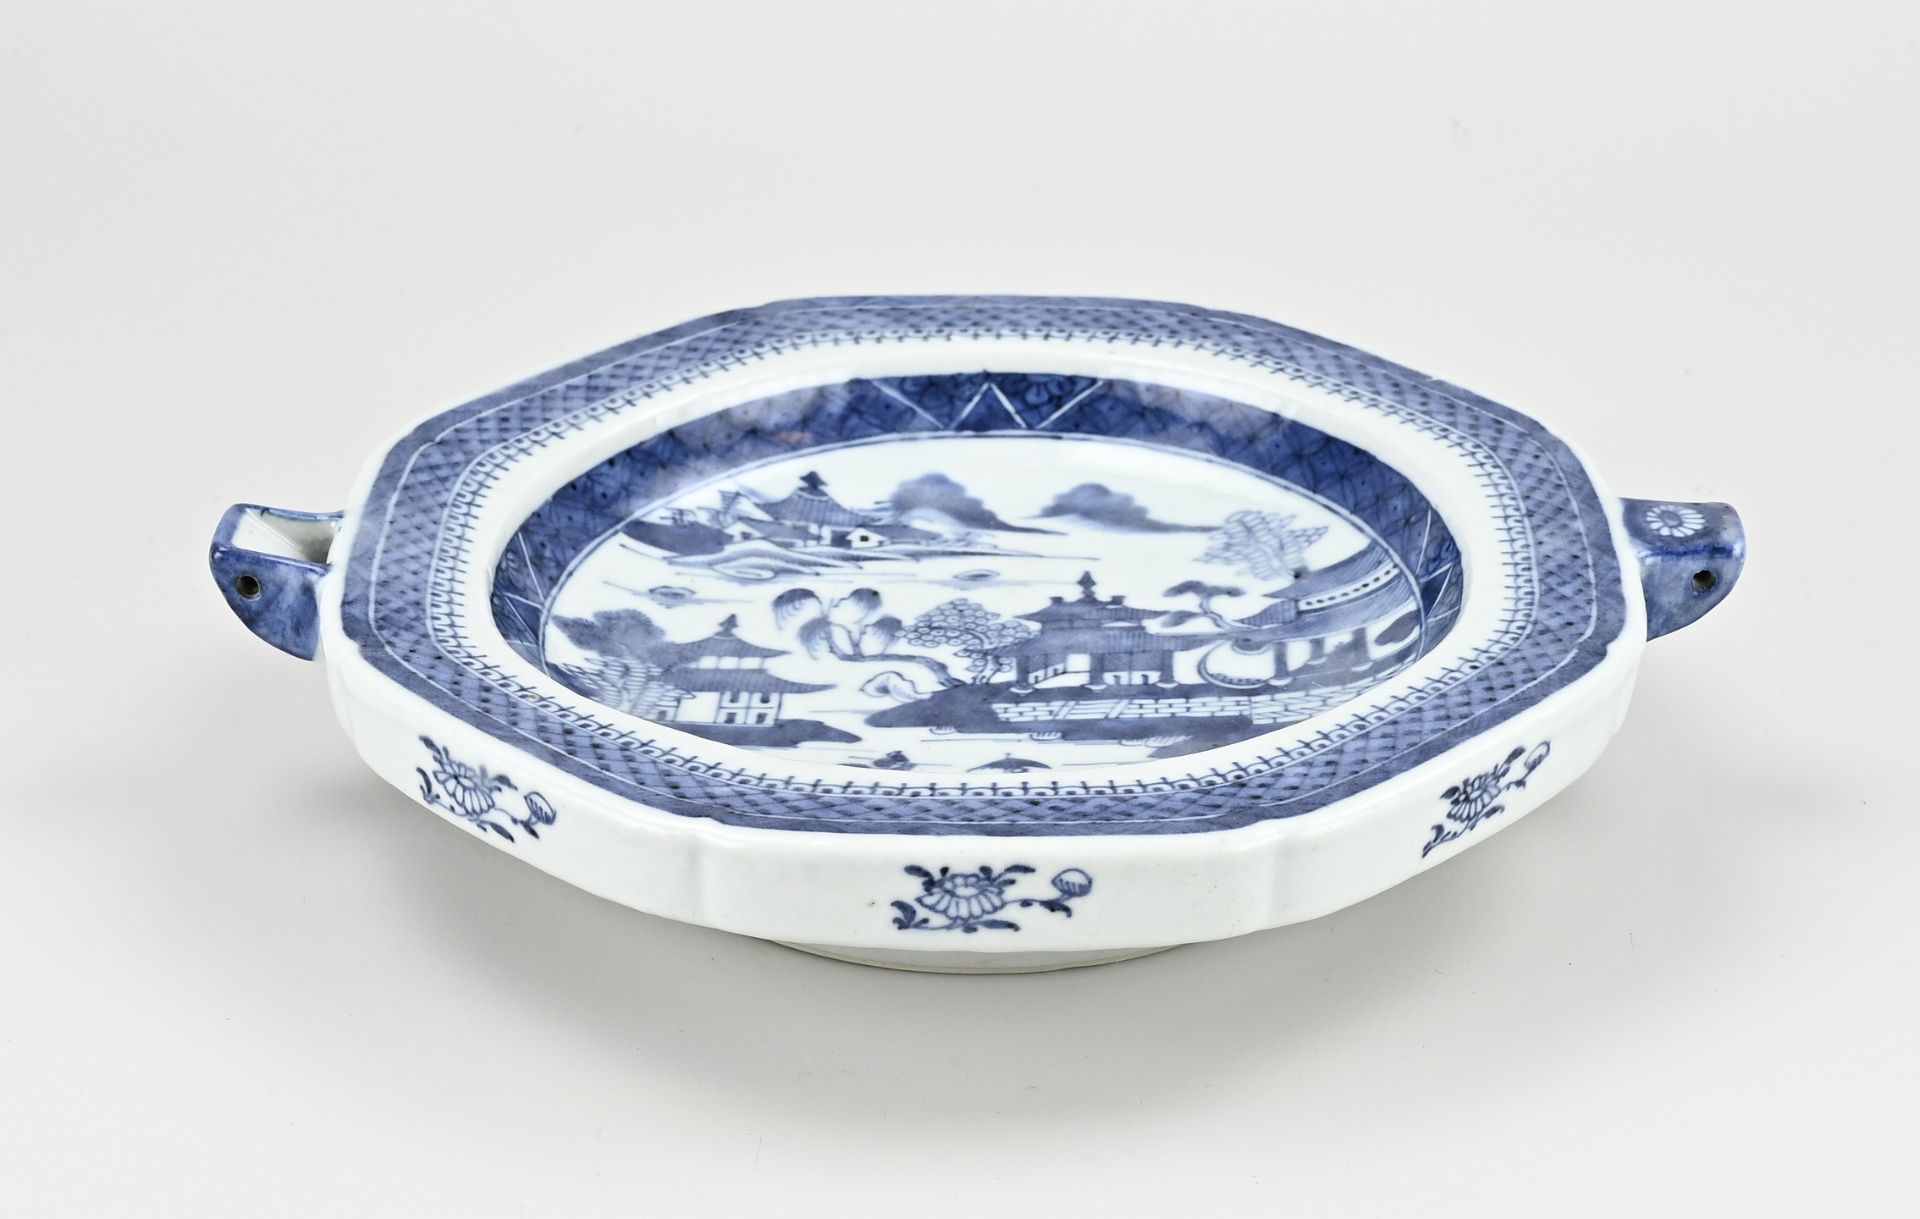 18th century Chinese warming dish